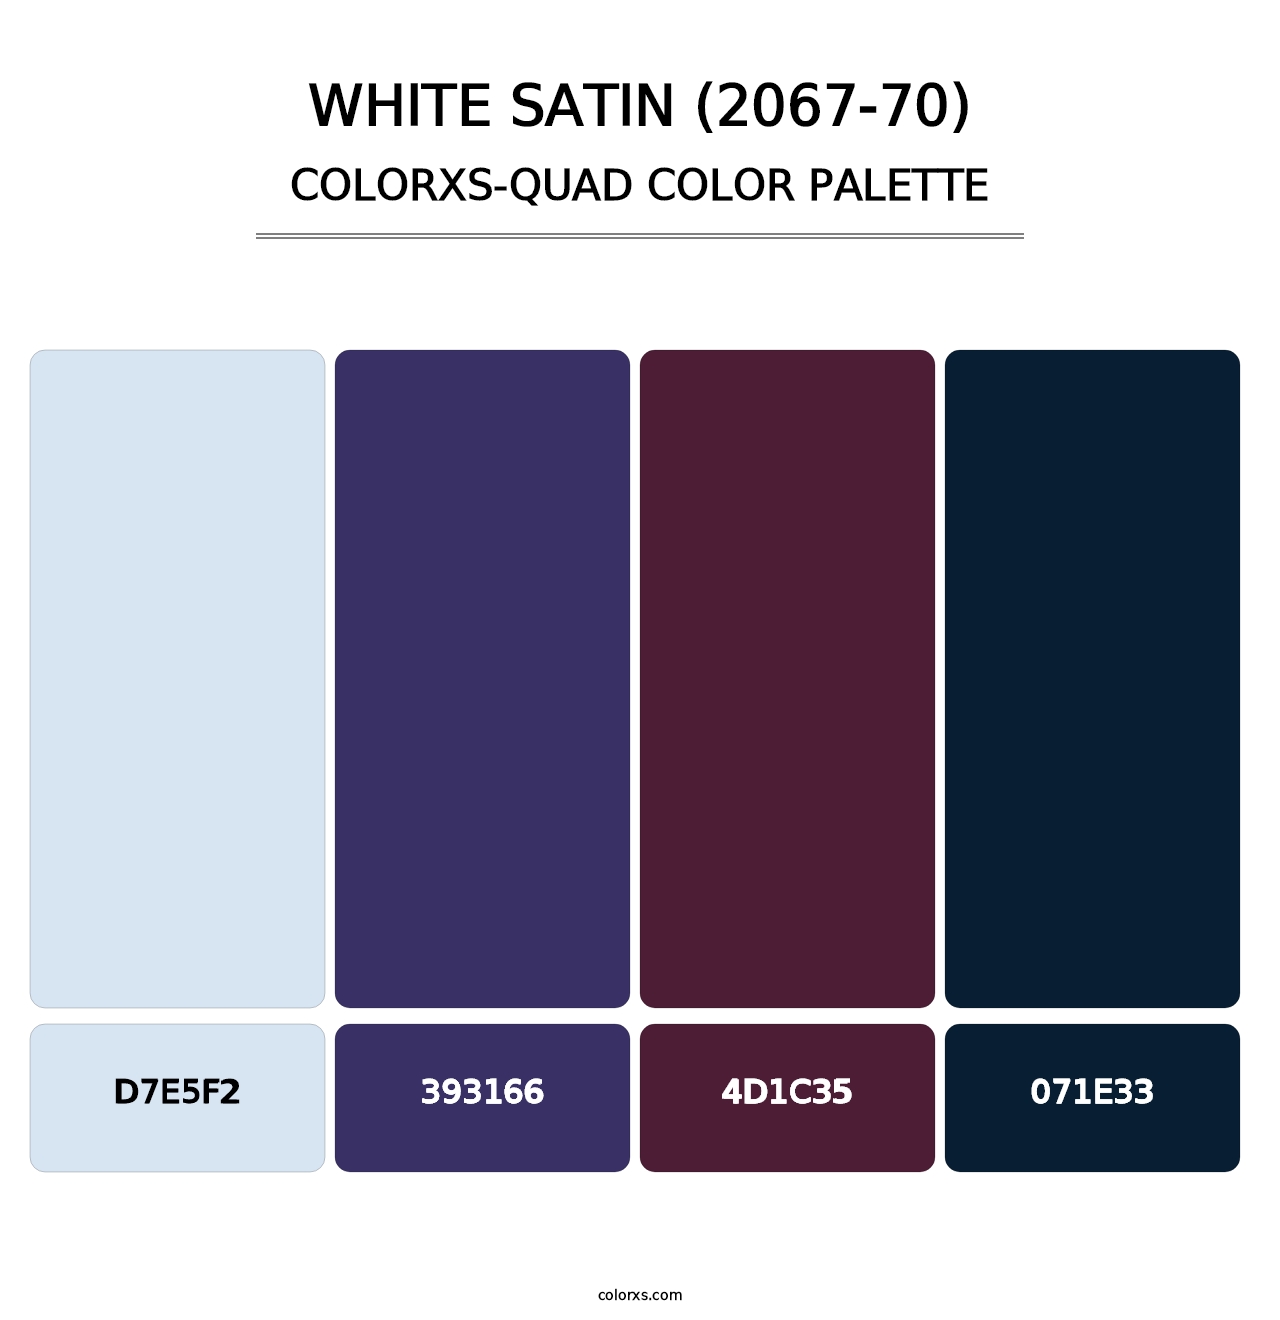 White Satin (2067-70) - Colorxs Quad Palette